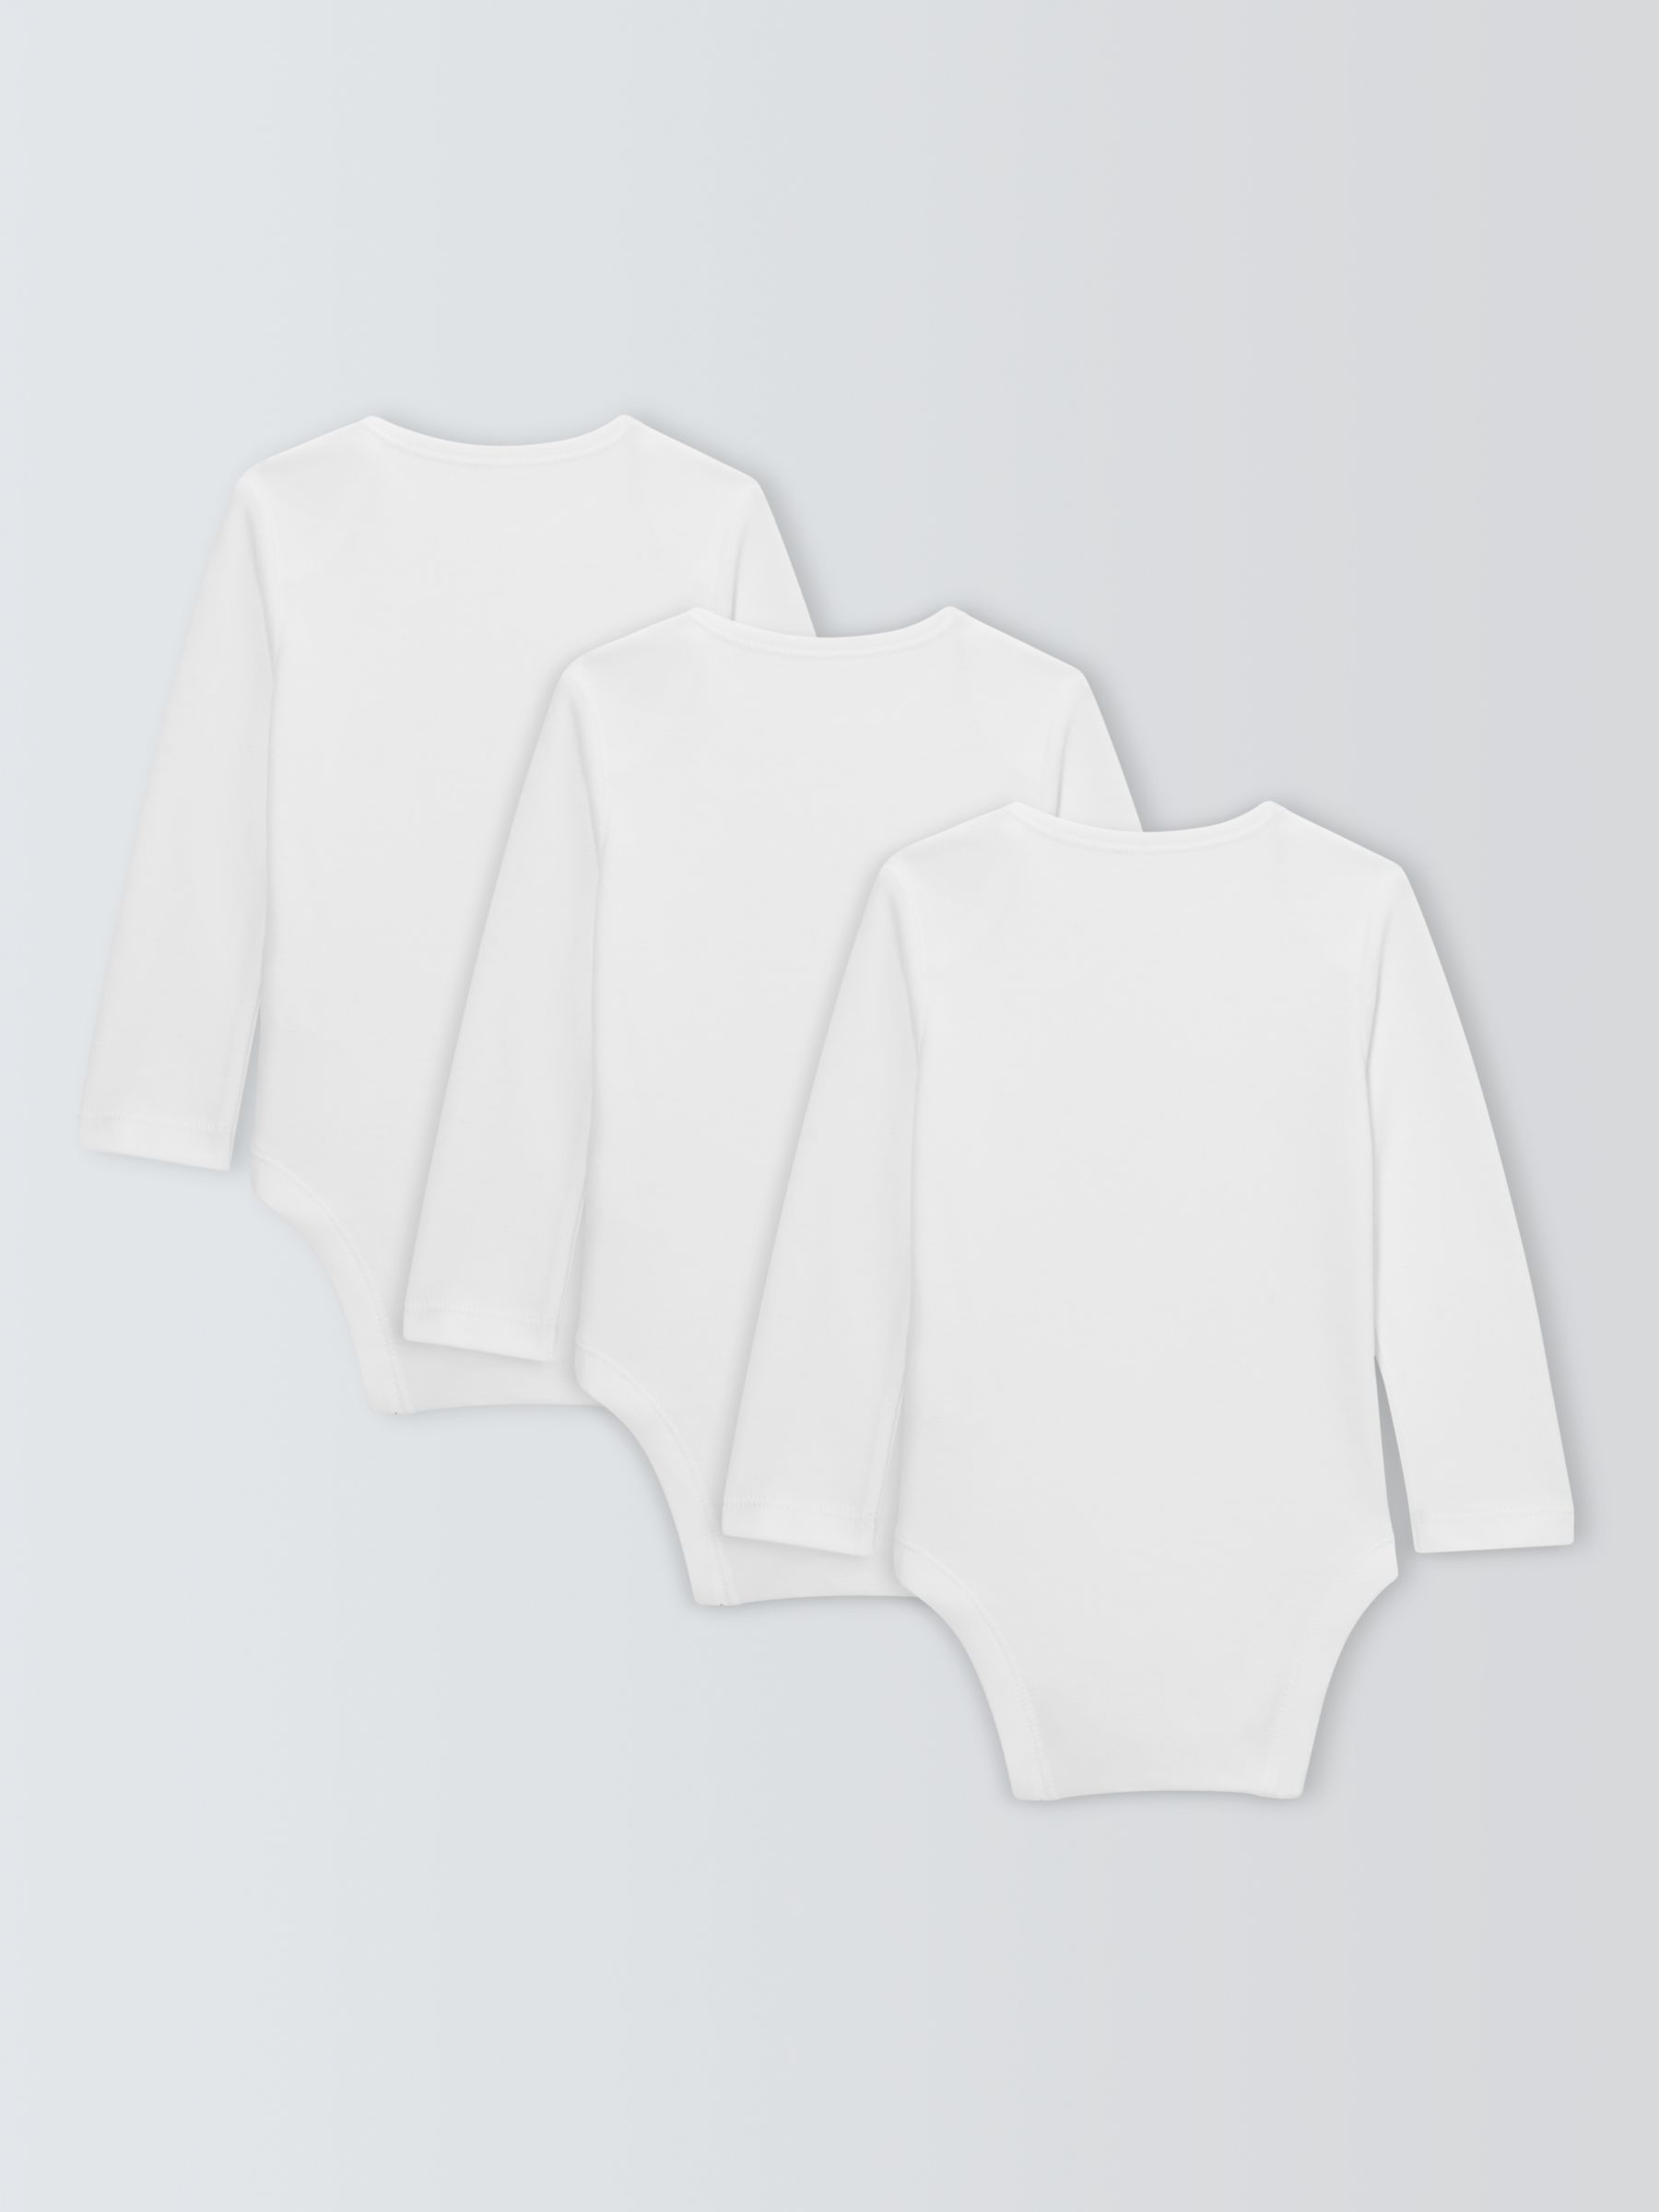 John Lewis Baby Pima Cotton Long Sleeve Bodysuit, Pack of 3, White, 9-12 months